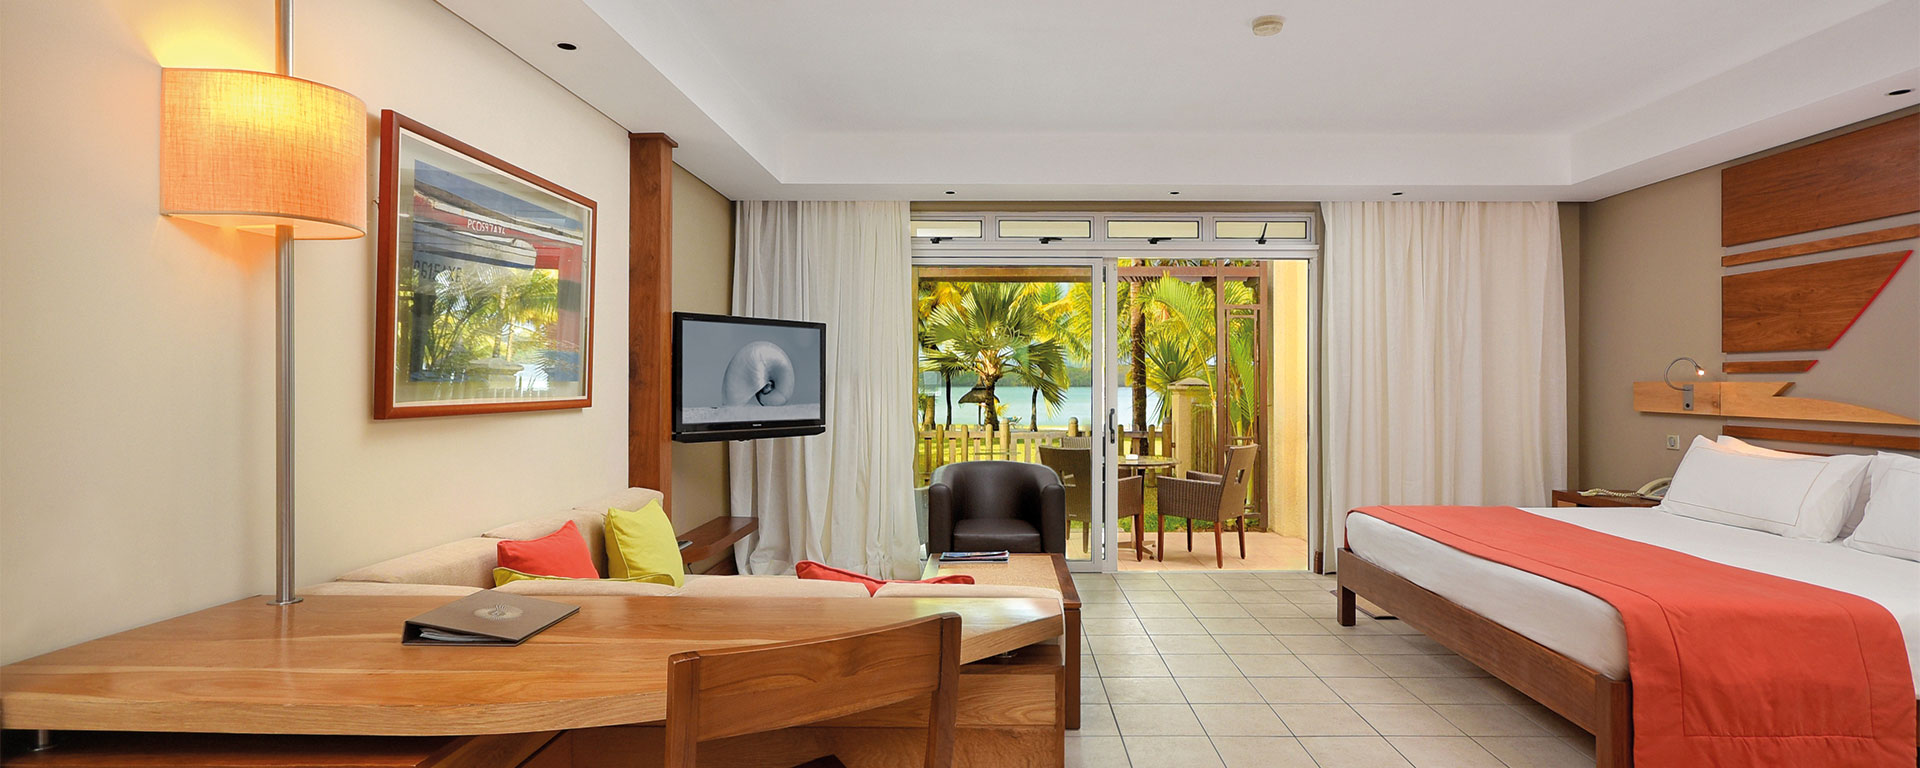 The Hotel - Shandrani Beachcomber - Beachcomber Resorts & Hotels in ...